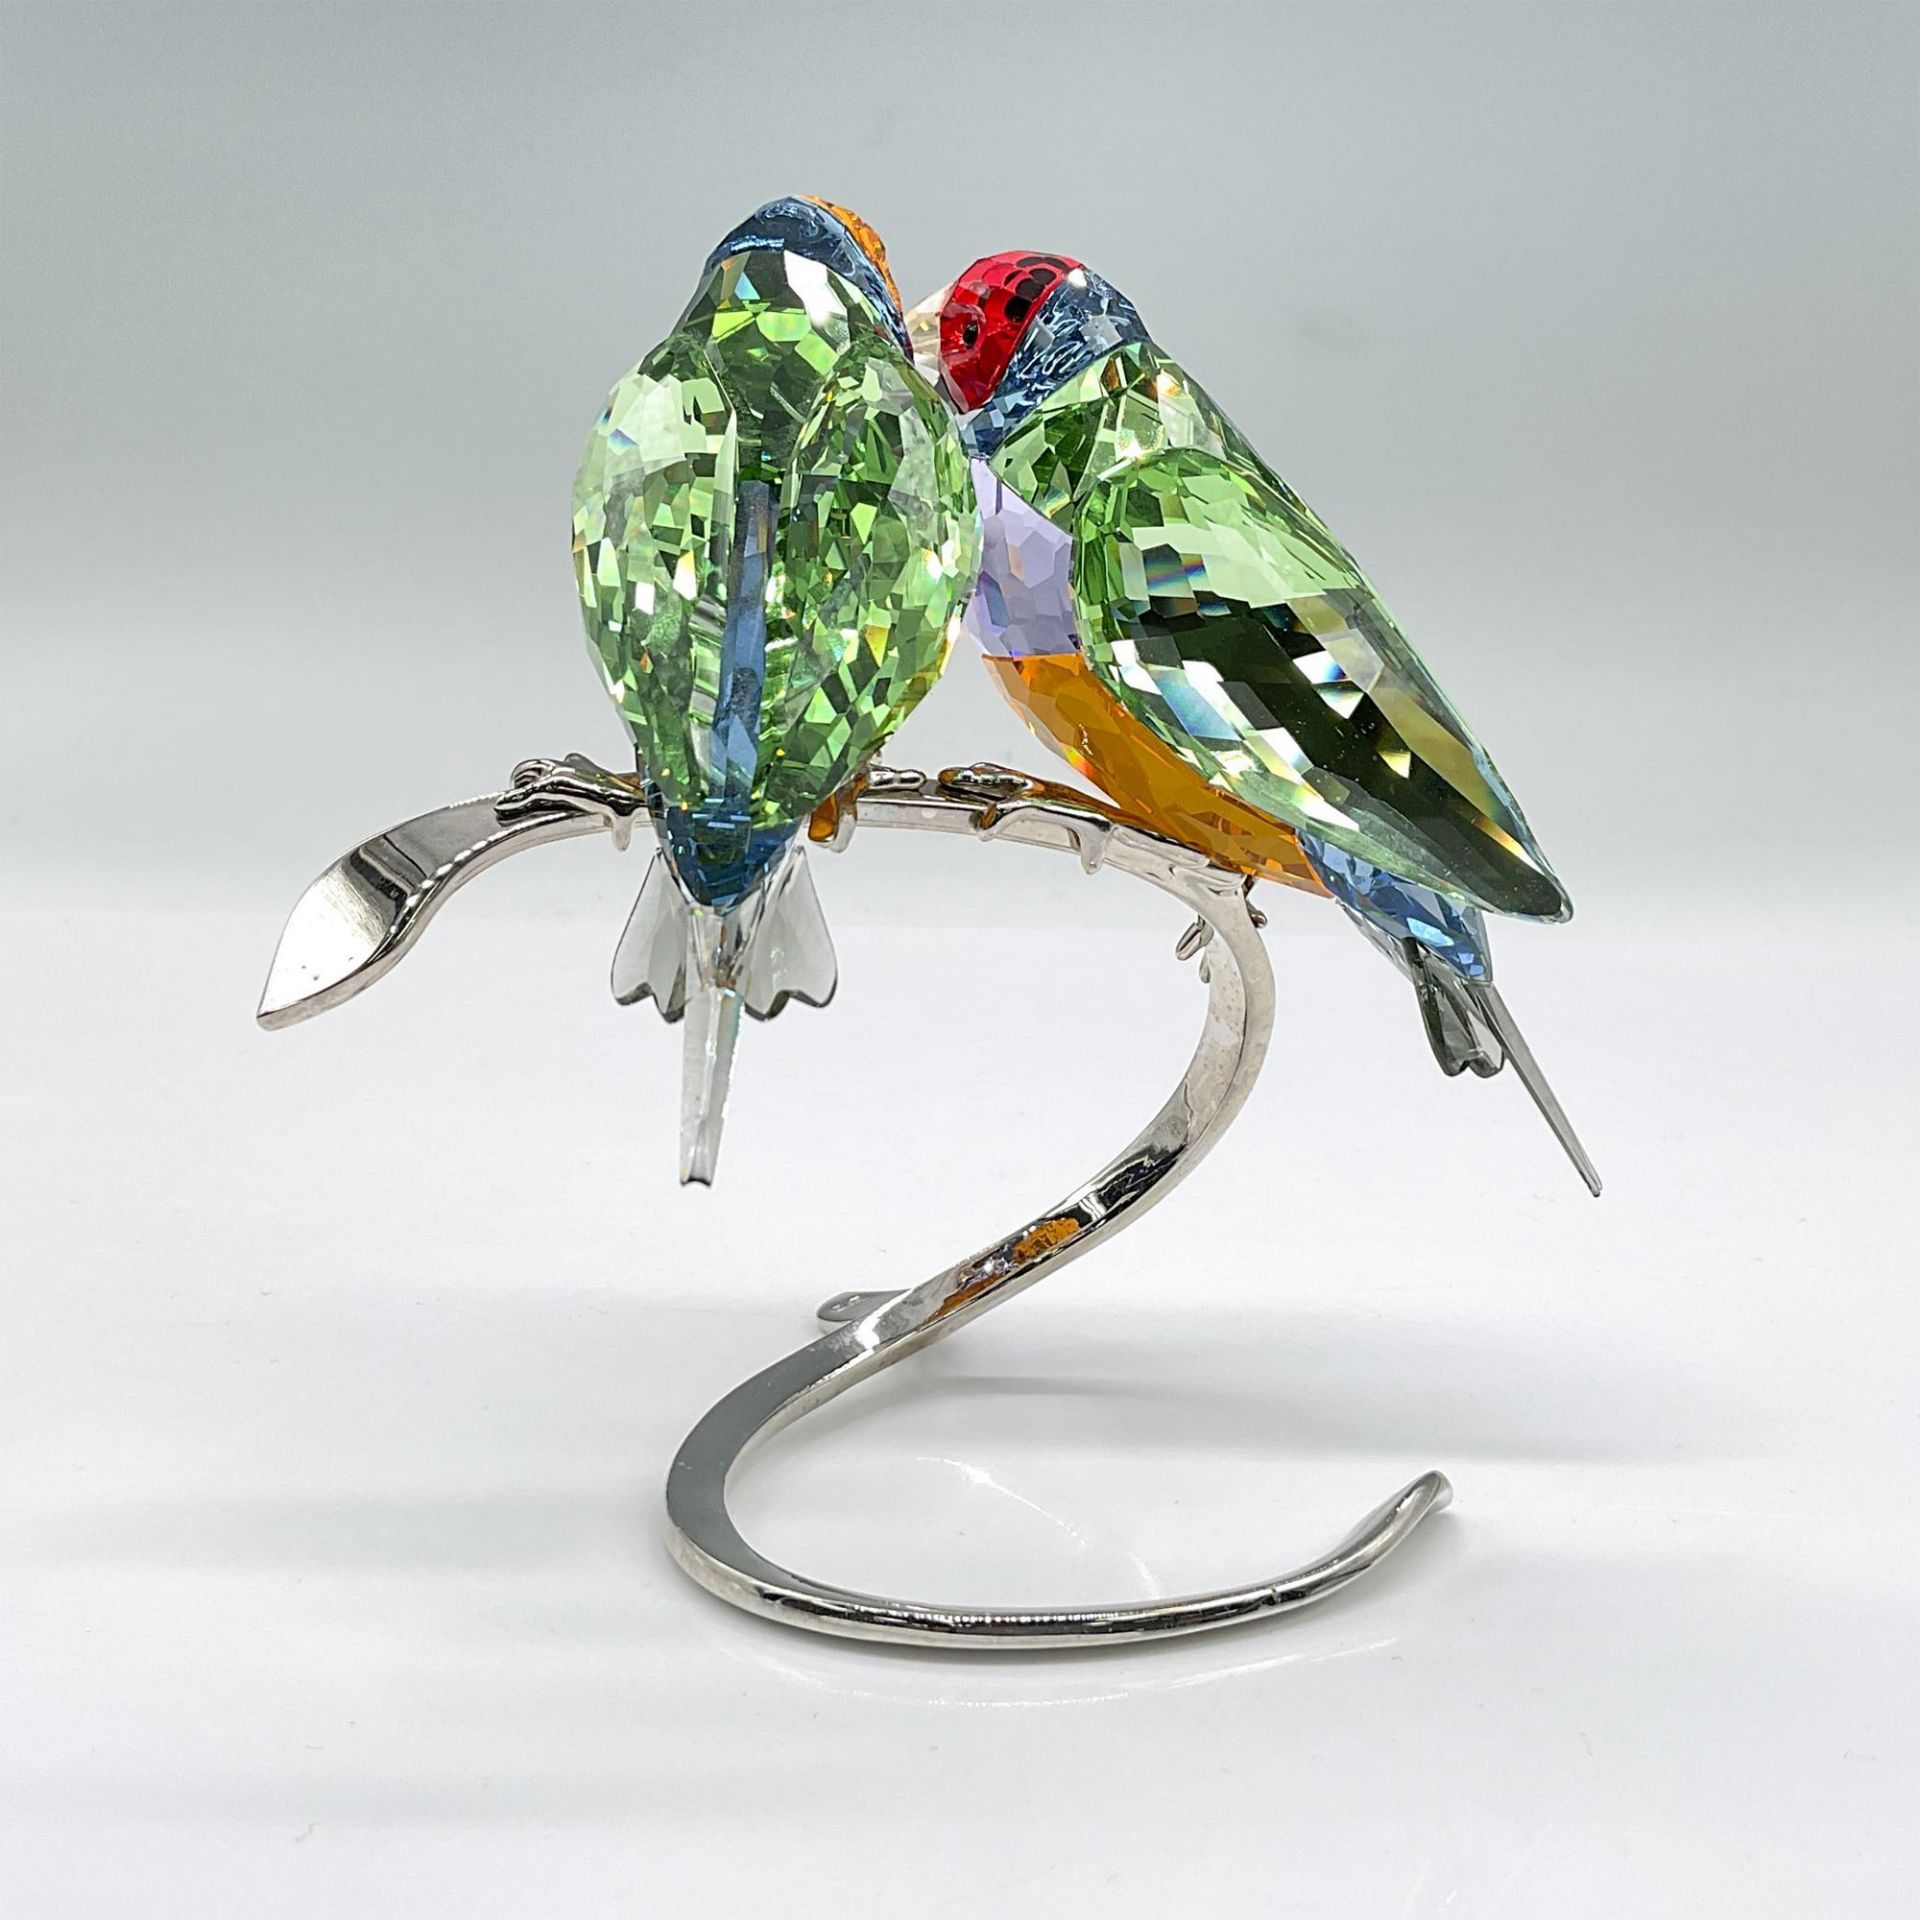 Swarovski Crystal Figurine, Gouldian Finches - Image 2 of 4